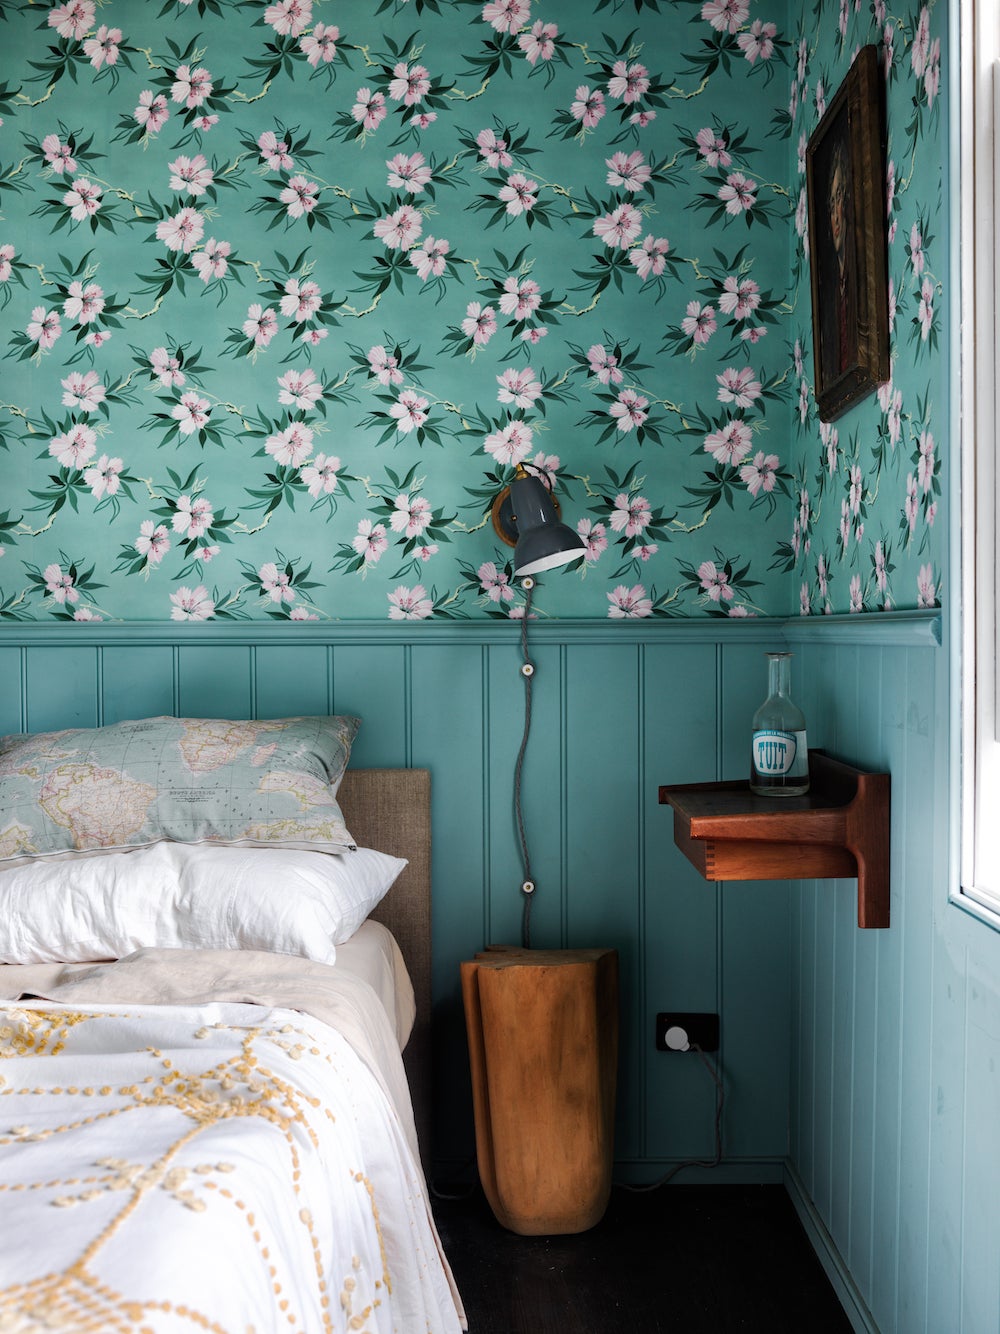 floral bedroom wallpaper